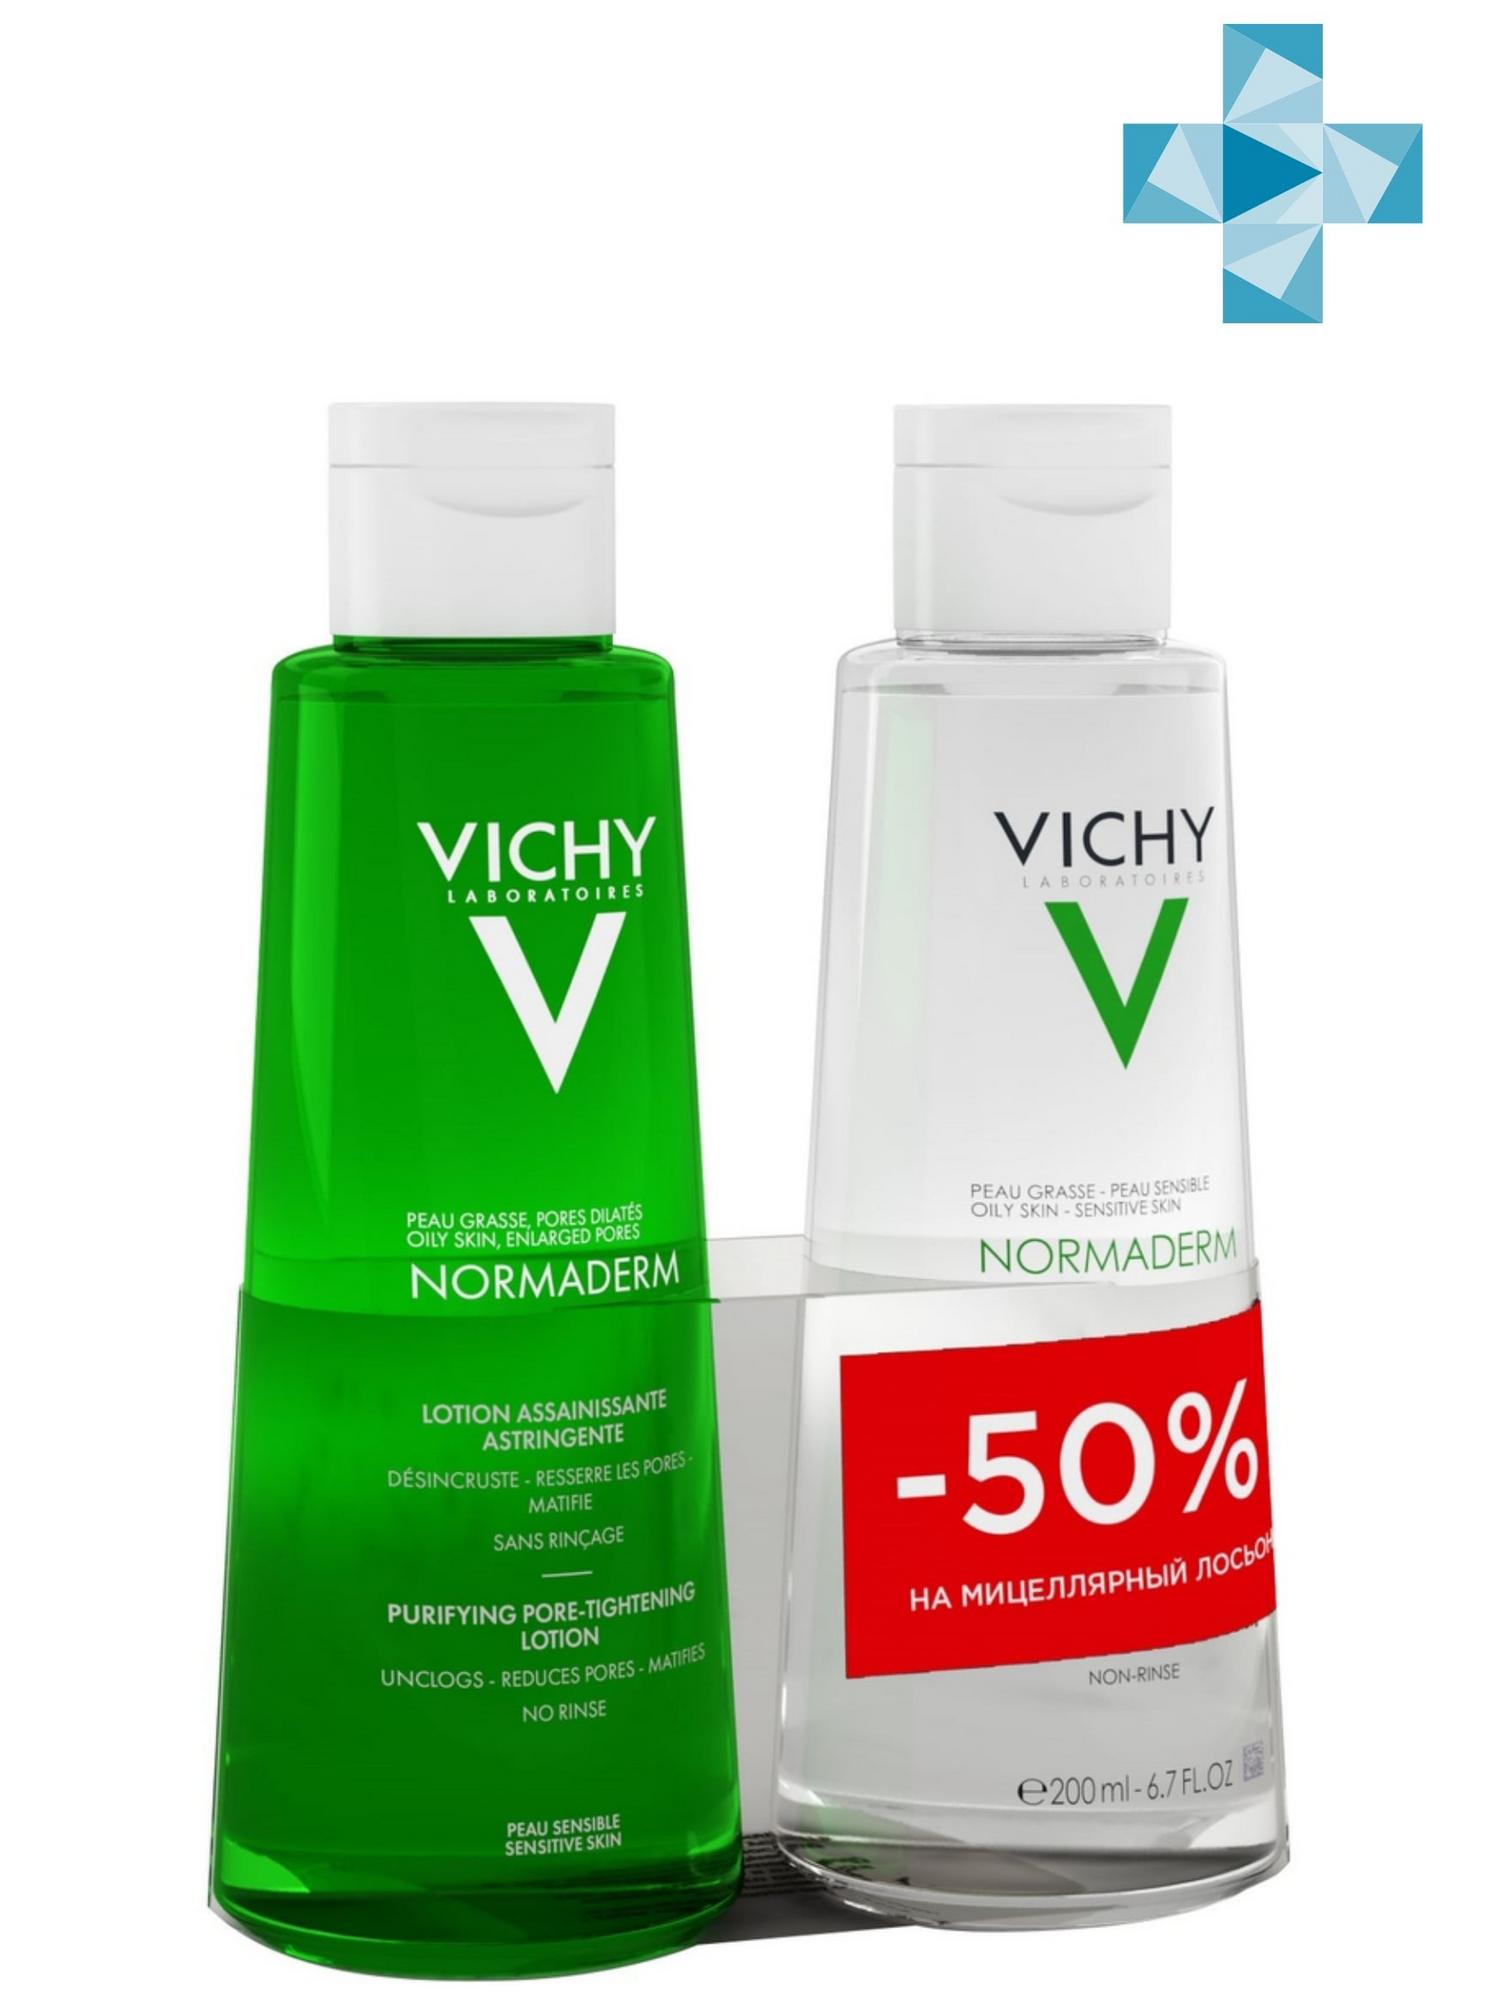 Купить Vichy Набор: Лосьон сужающий поры, 200 мл + Мицеллярный лосьон, 200 мл (Vichy, Normaderm), Франция